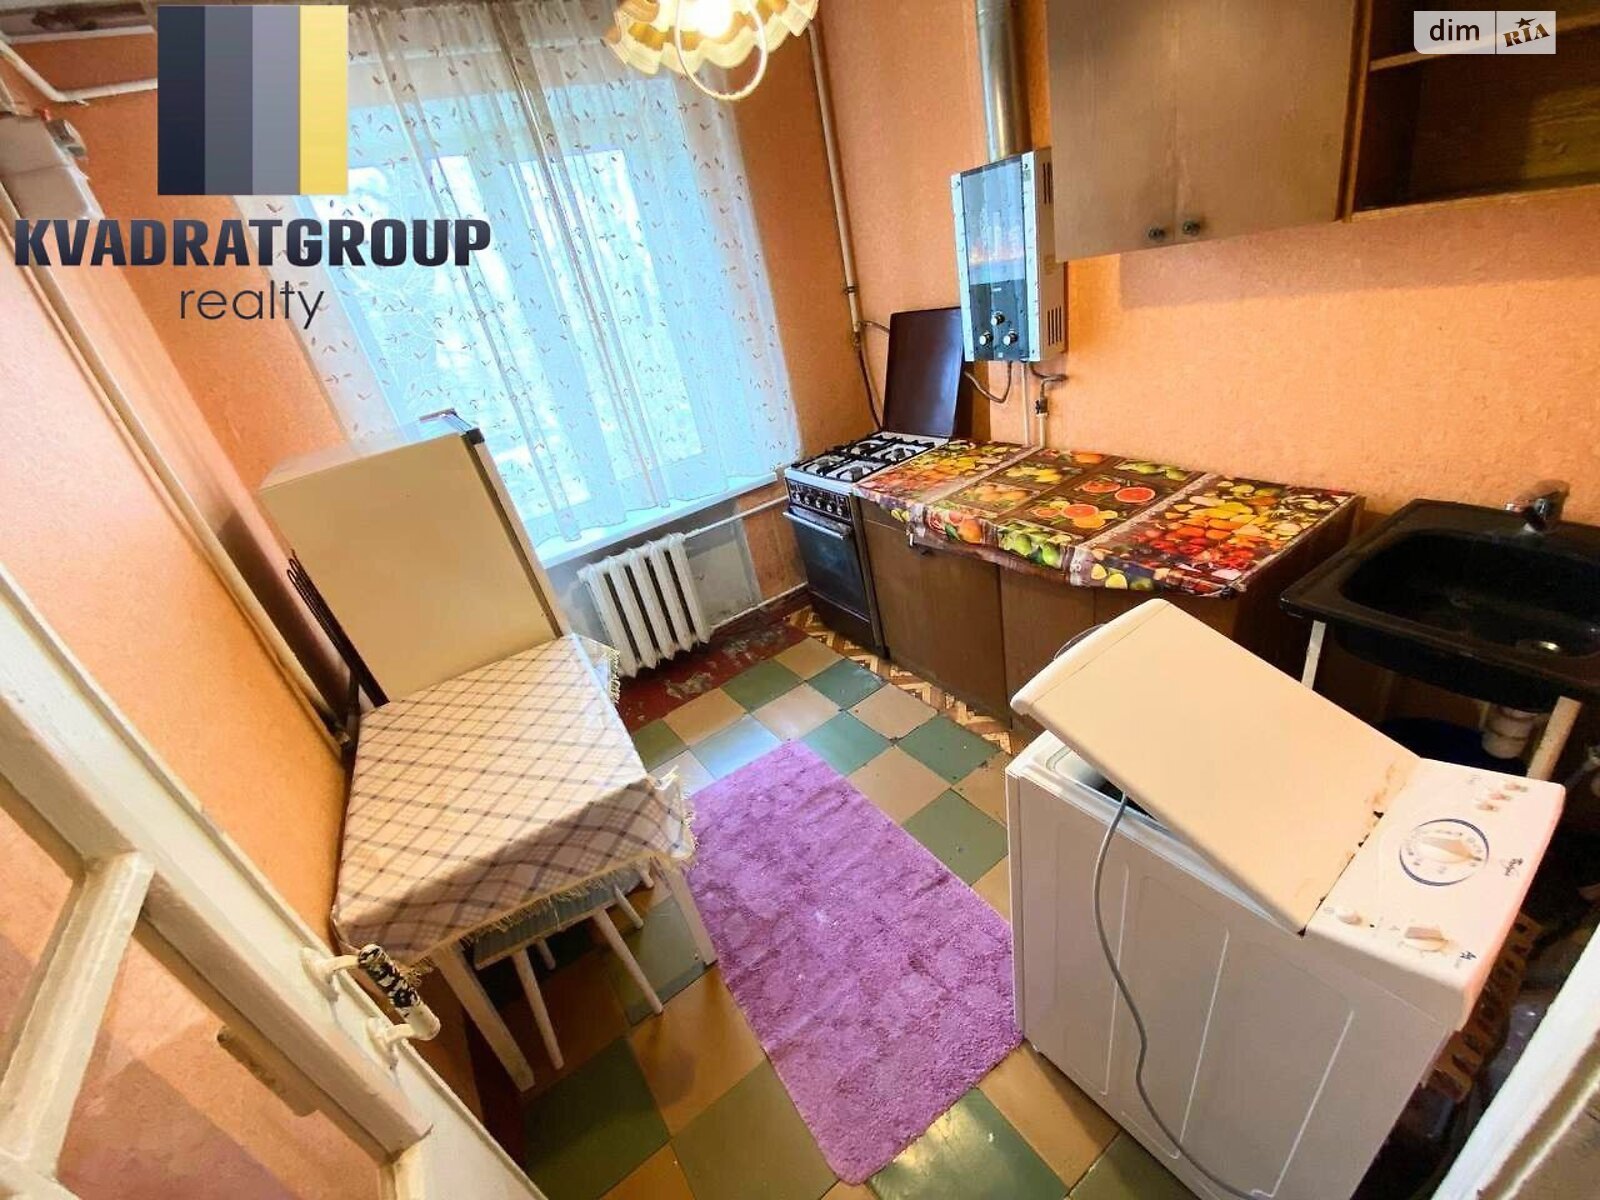 Продажа однокомнатной квартиры в Днепре, на ул. Караваева 37, район Новокодакский фото 1